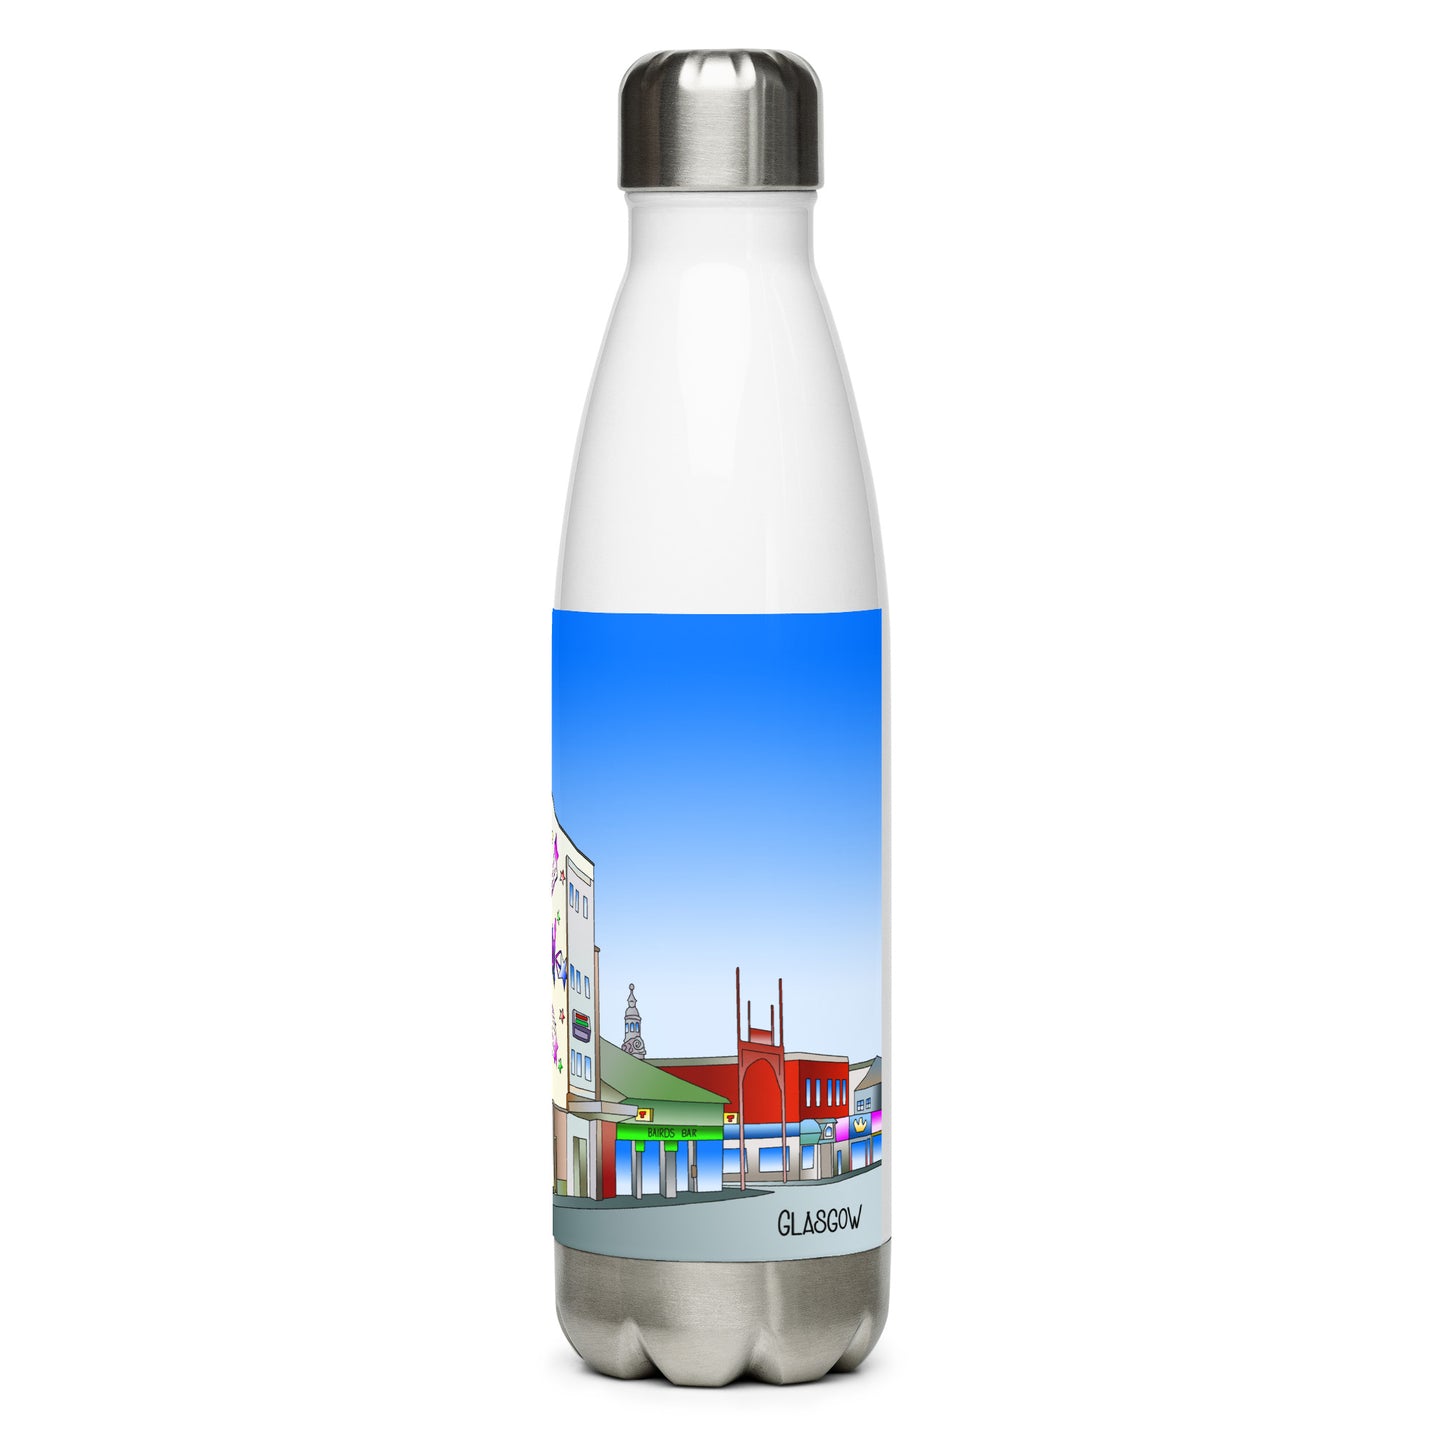 The Barrowlands Glasgow Stainless Steel Water Bottle